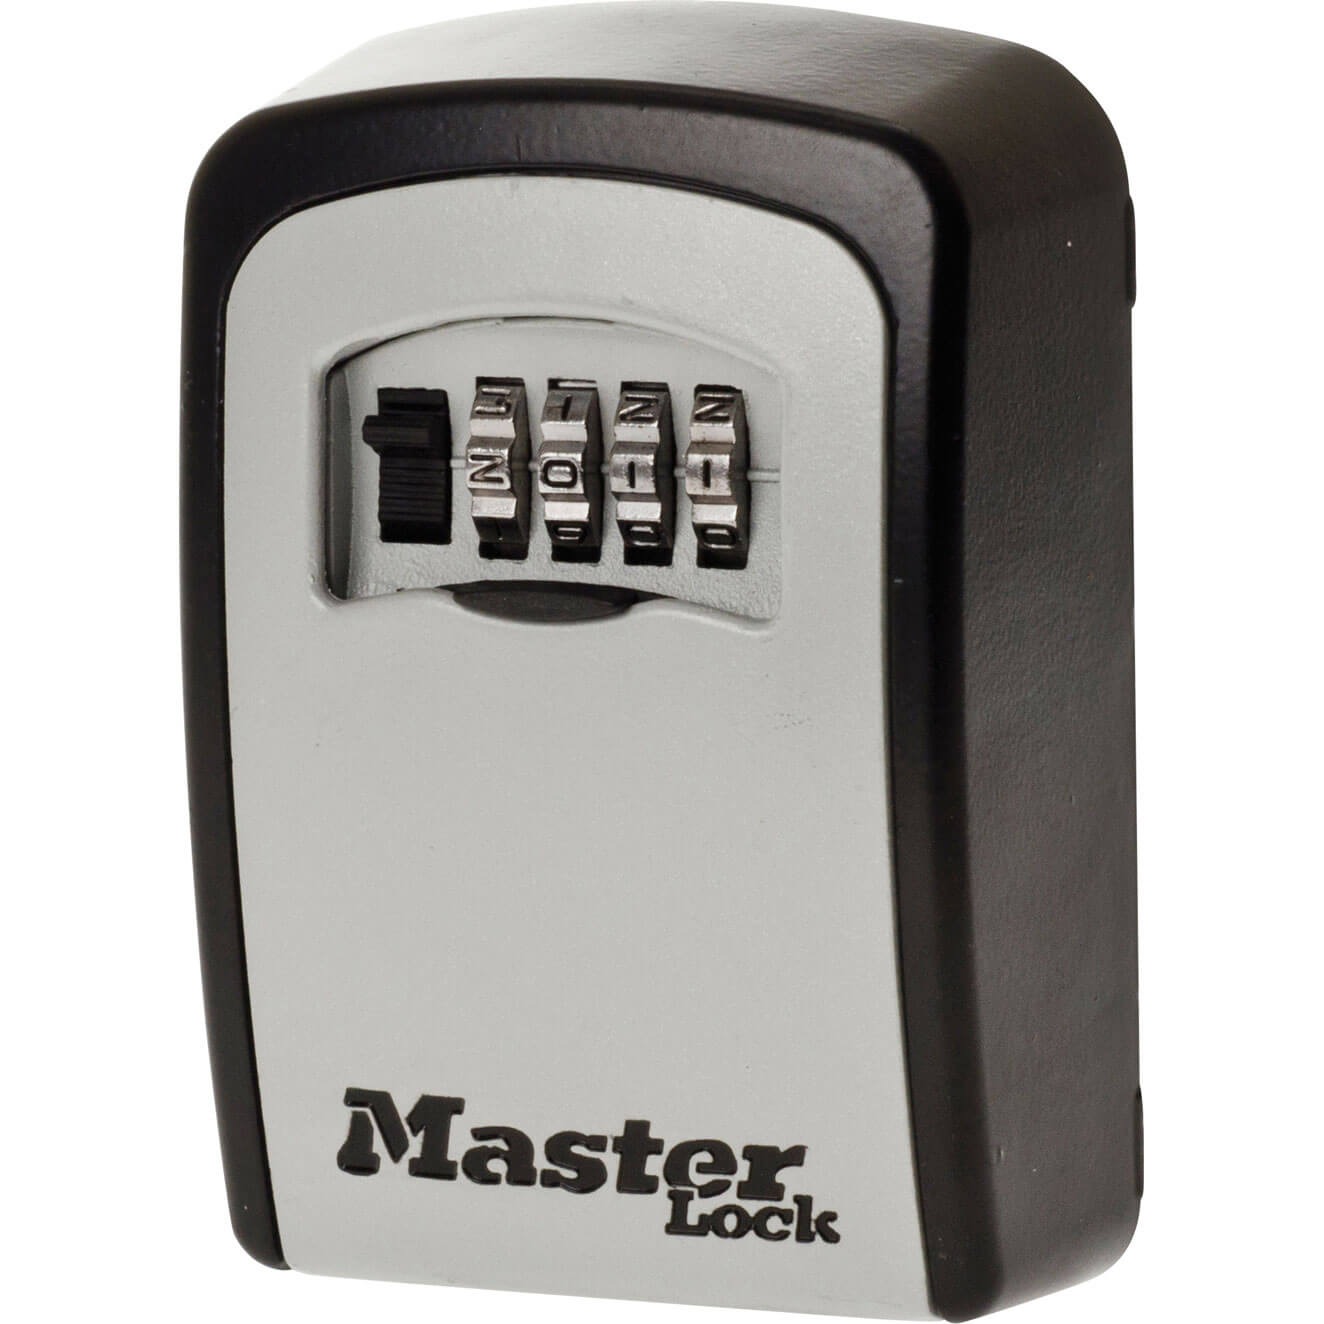 Image of Masterlock Wall Mount Key Safe M